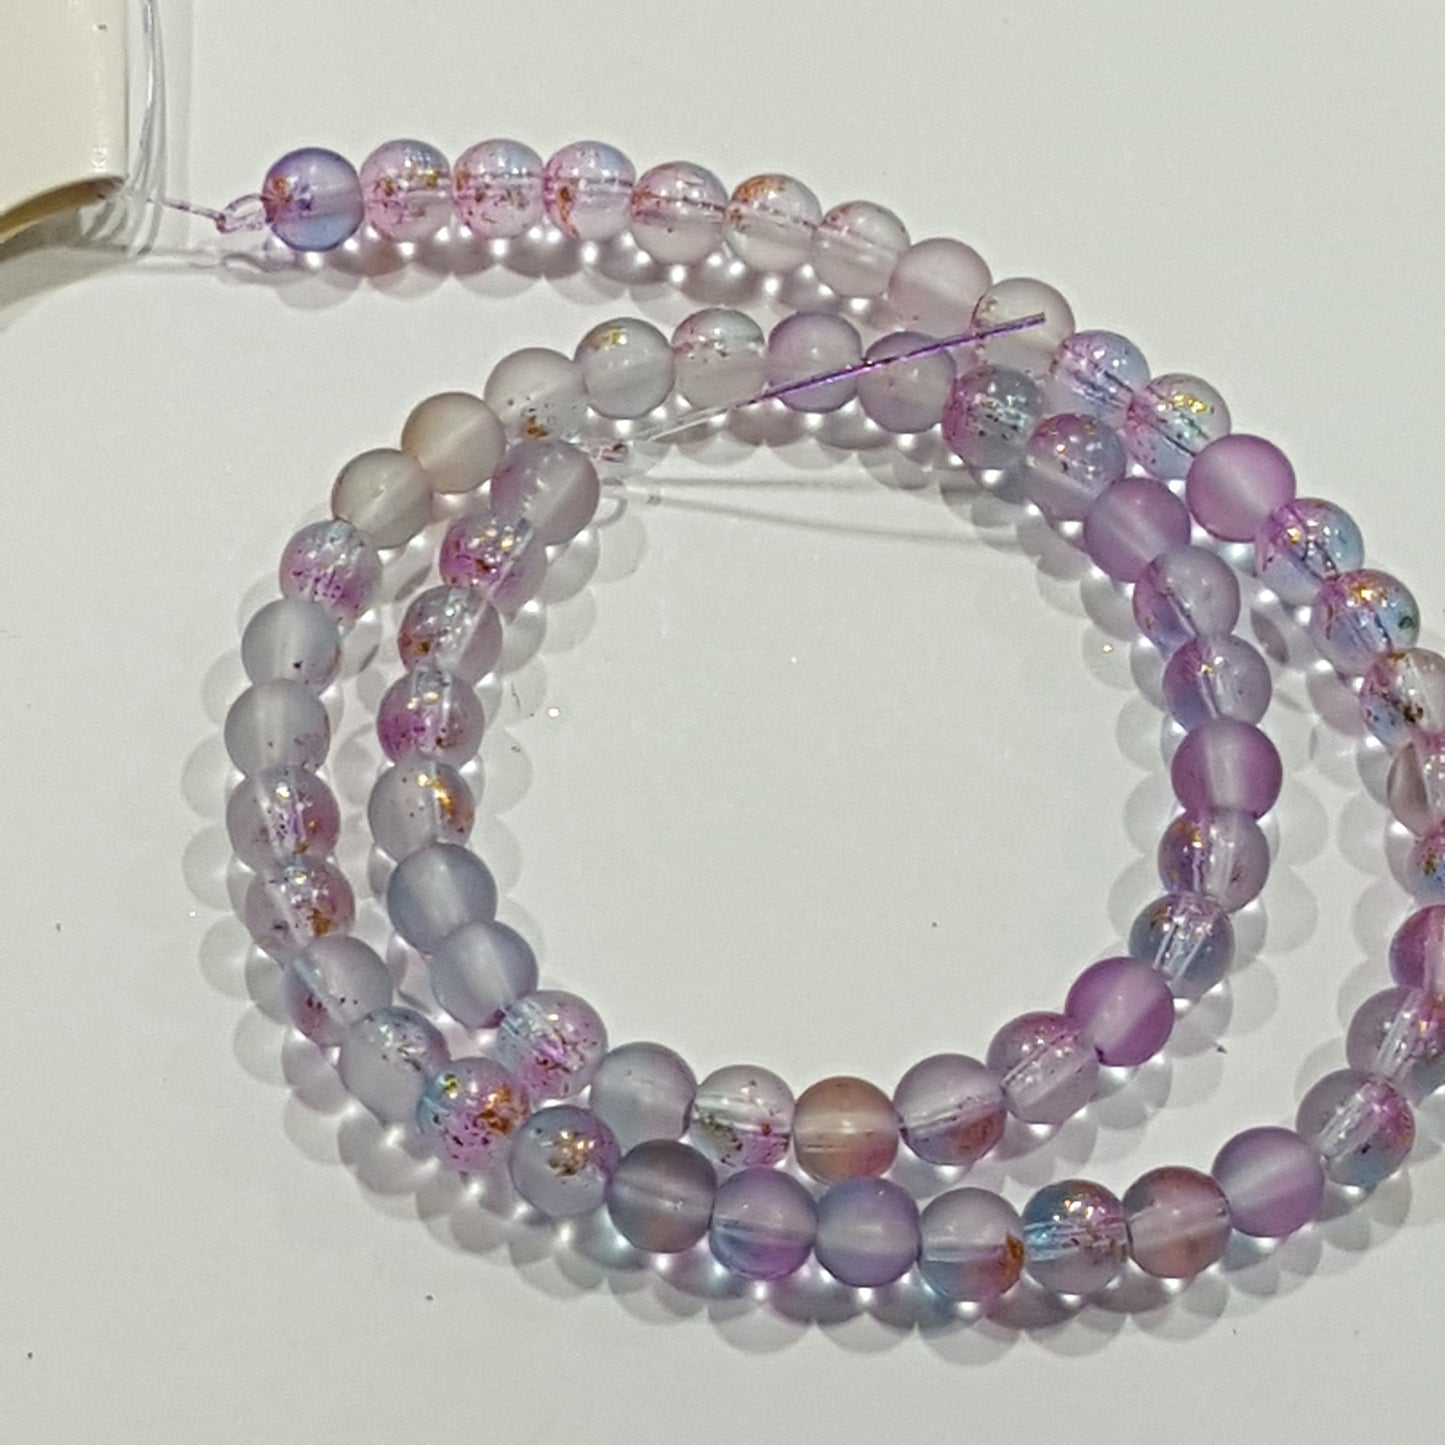 6mm Light Purple Frosted Glitter Glass Beads